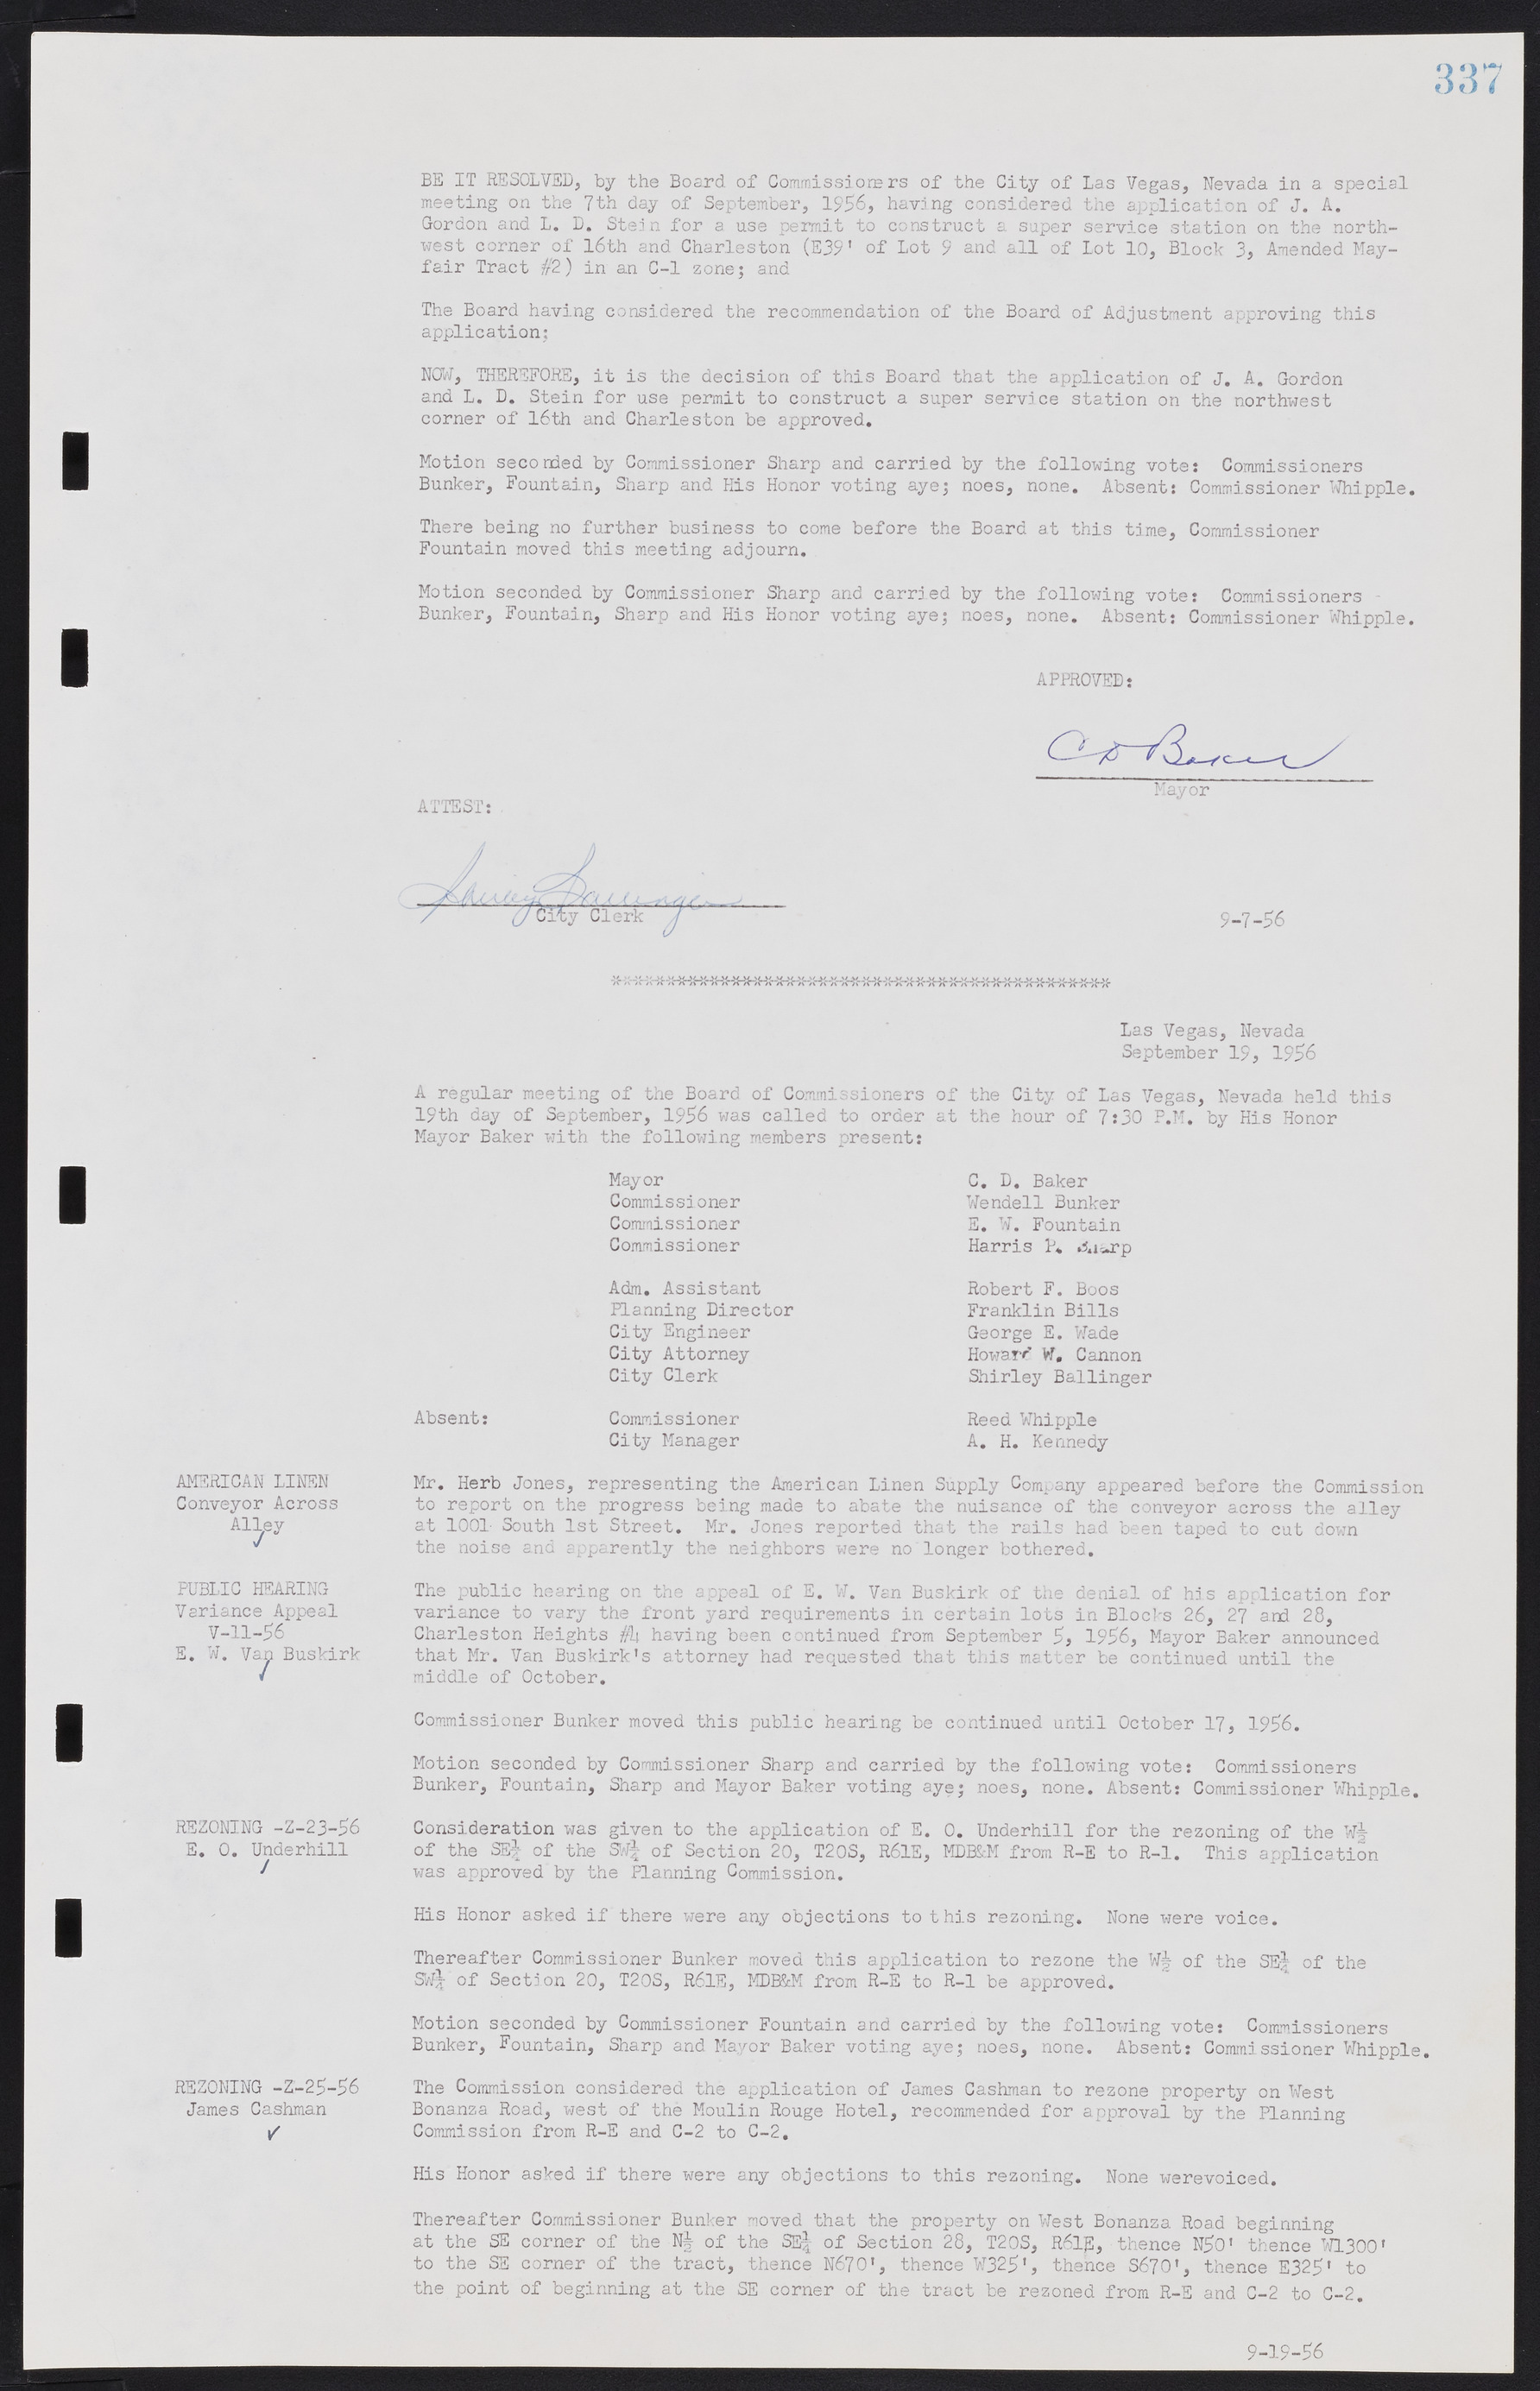 Las Vegas City Commission Minutes, September 21, 1955 to November 20, 1957, lvc000010-357